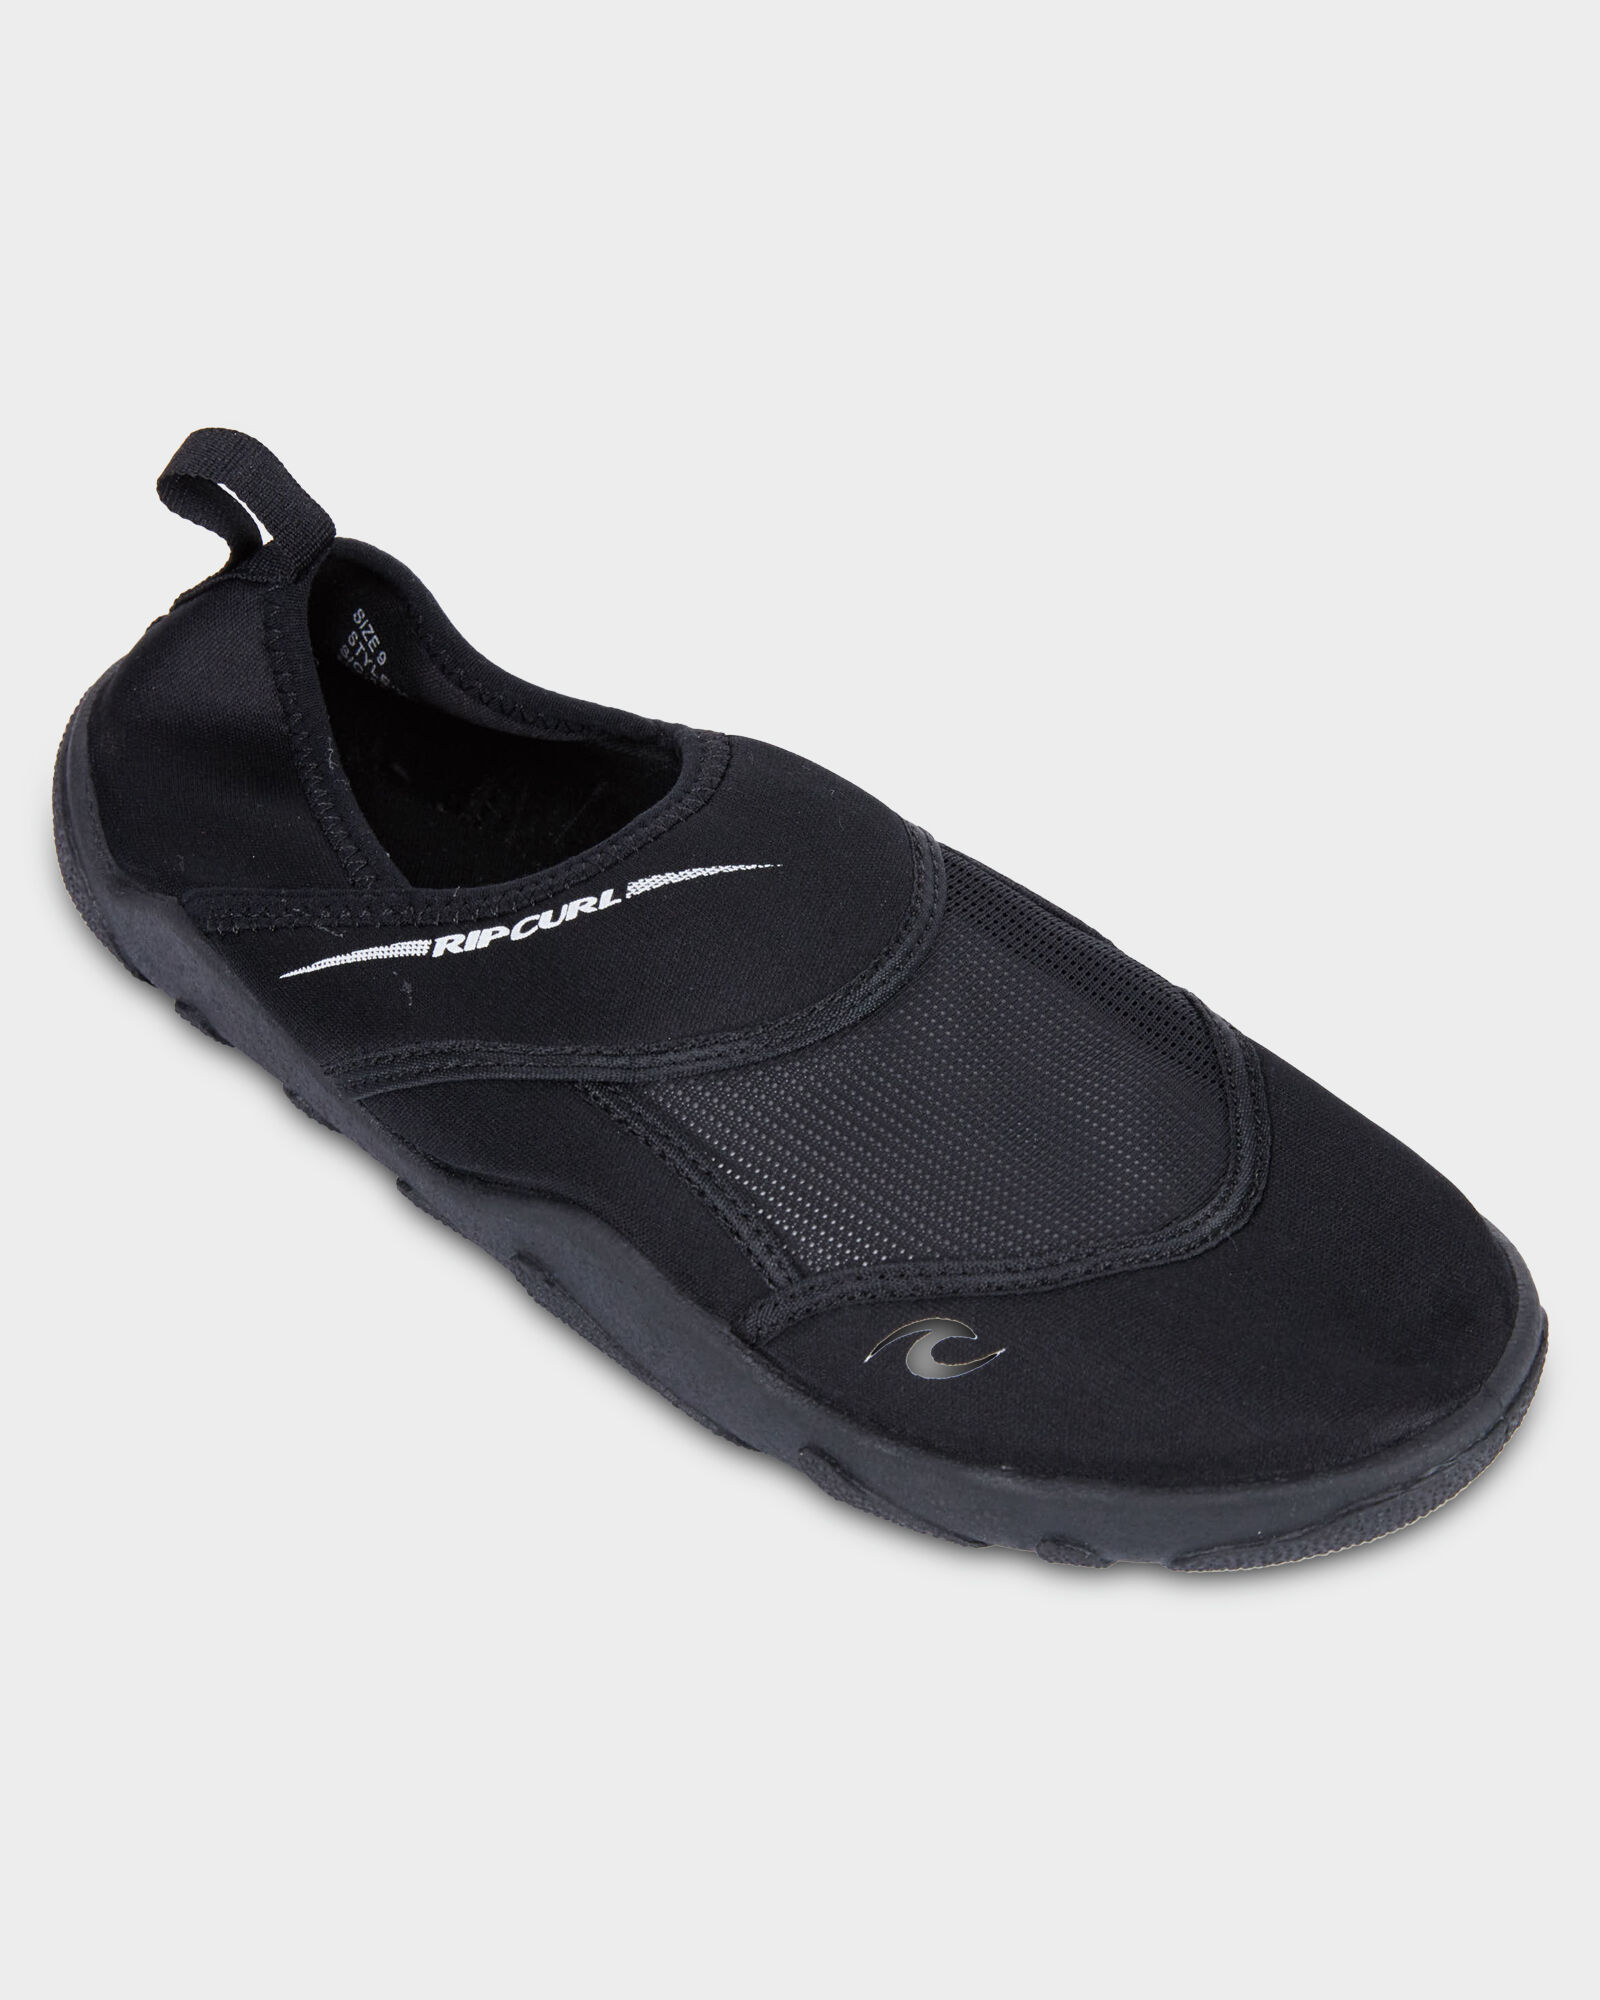 Columbia Tamiami PFG Water Shoe - Men's - Footwear